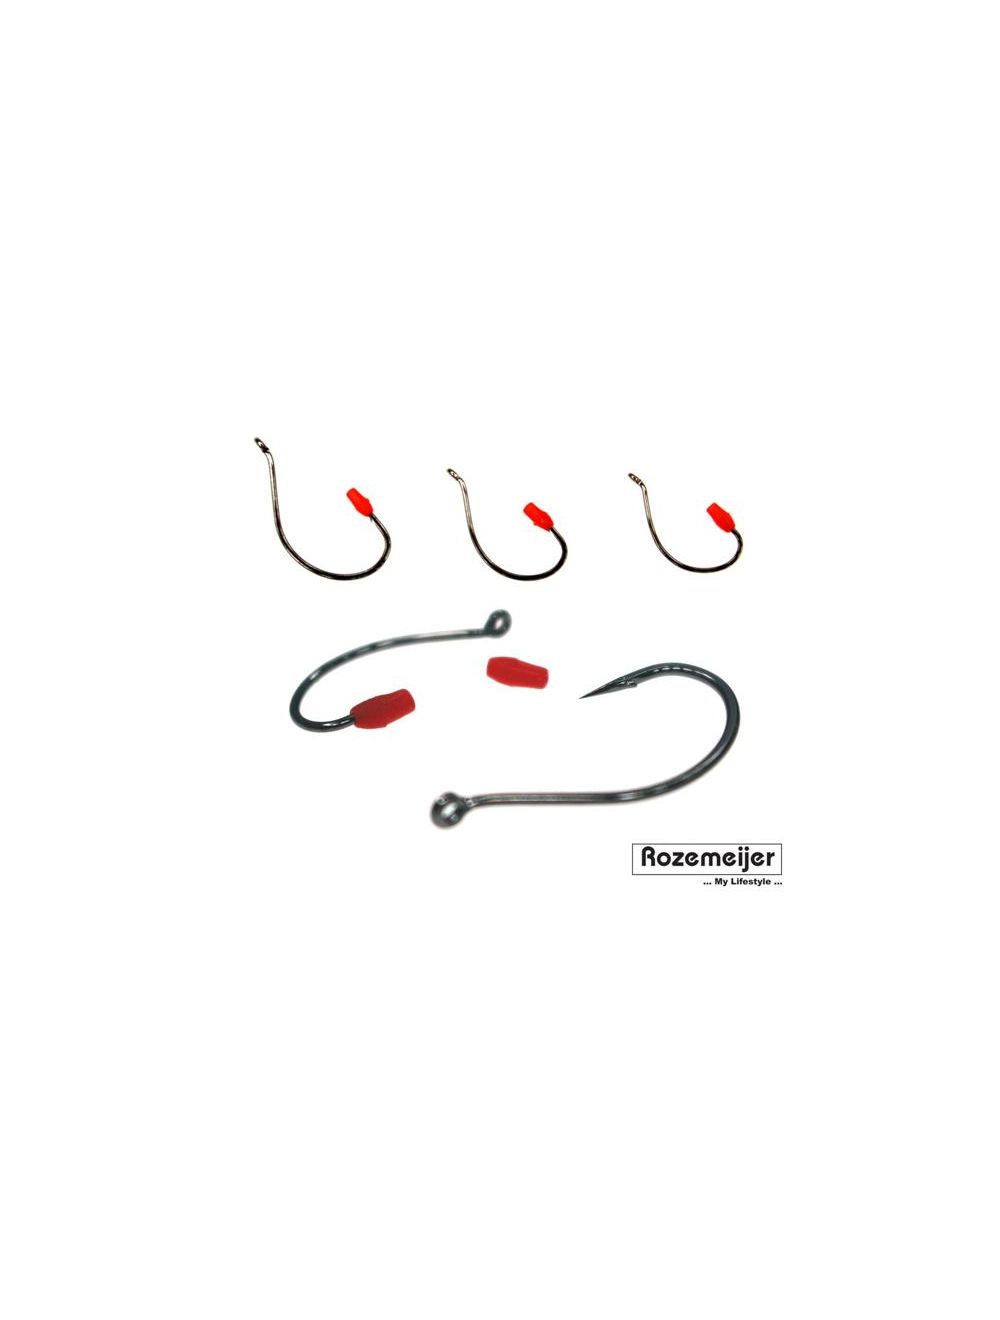 Rozemeijer Worm & Dropshot Hooks size 4 10pcs